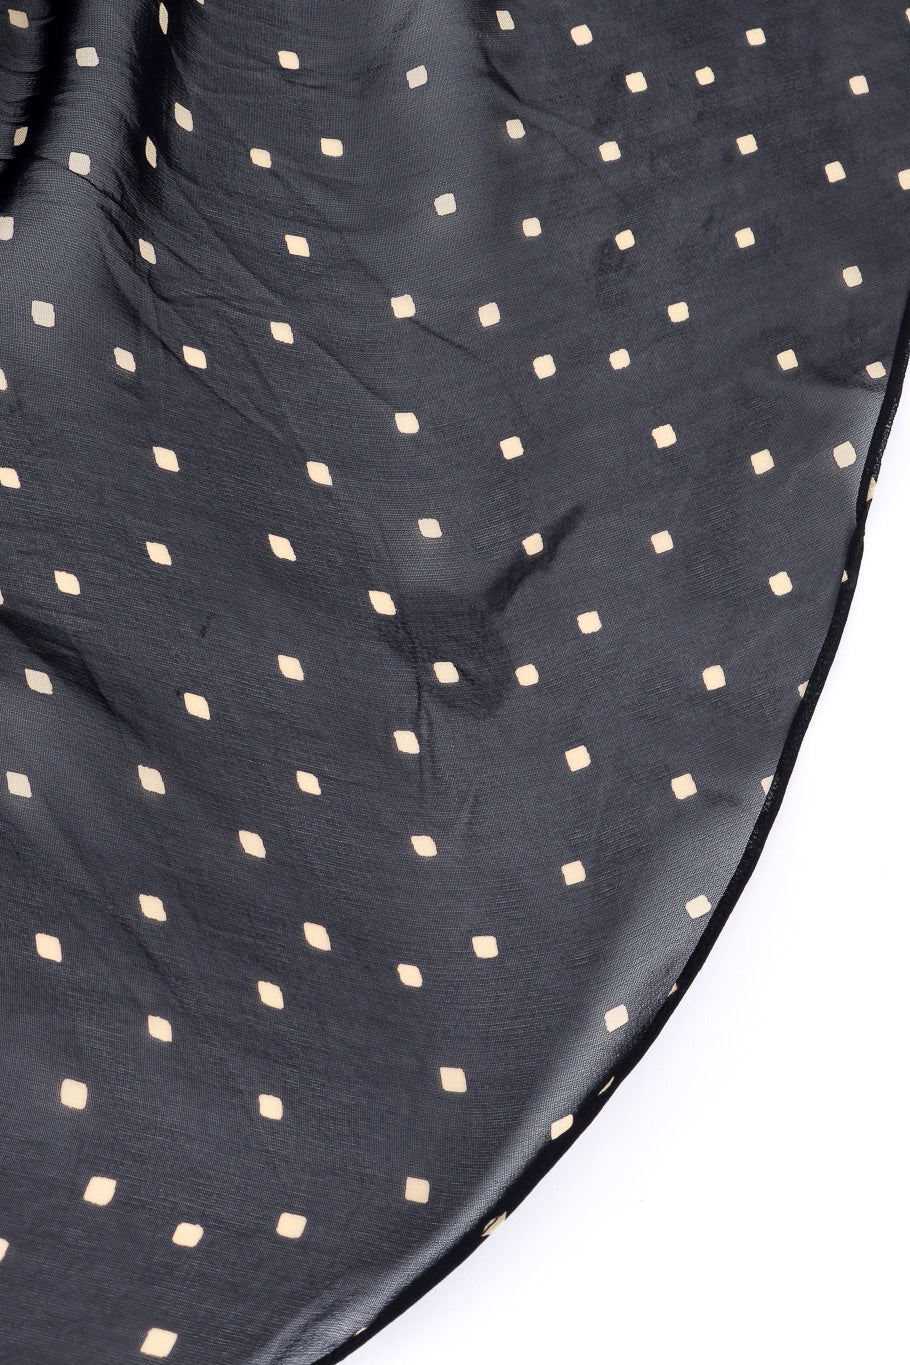 Donna Karan Diamond Dot Ruffle Dress spot closeup @Recessla